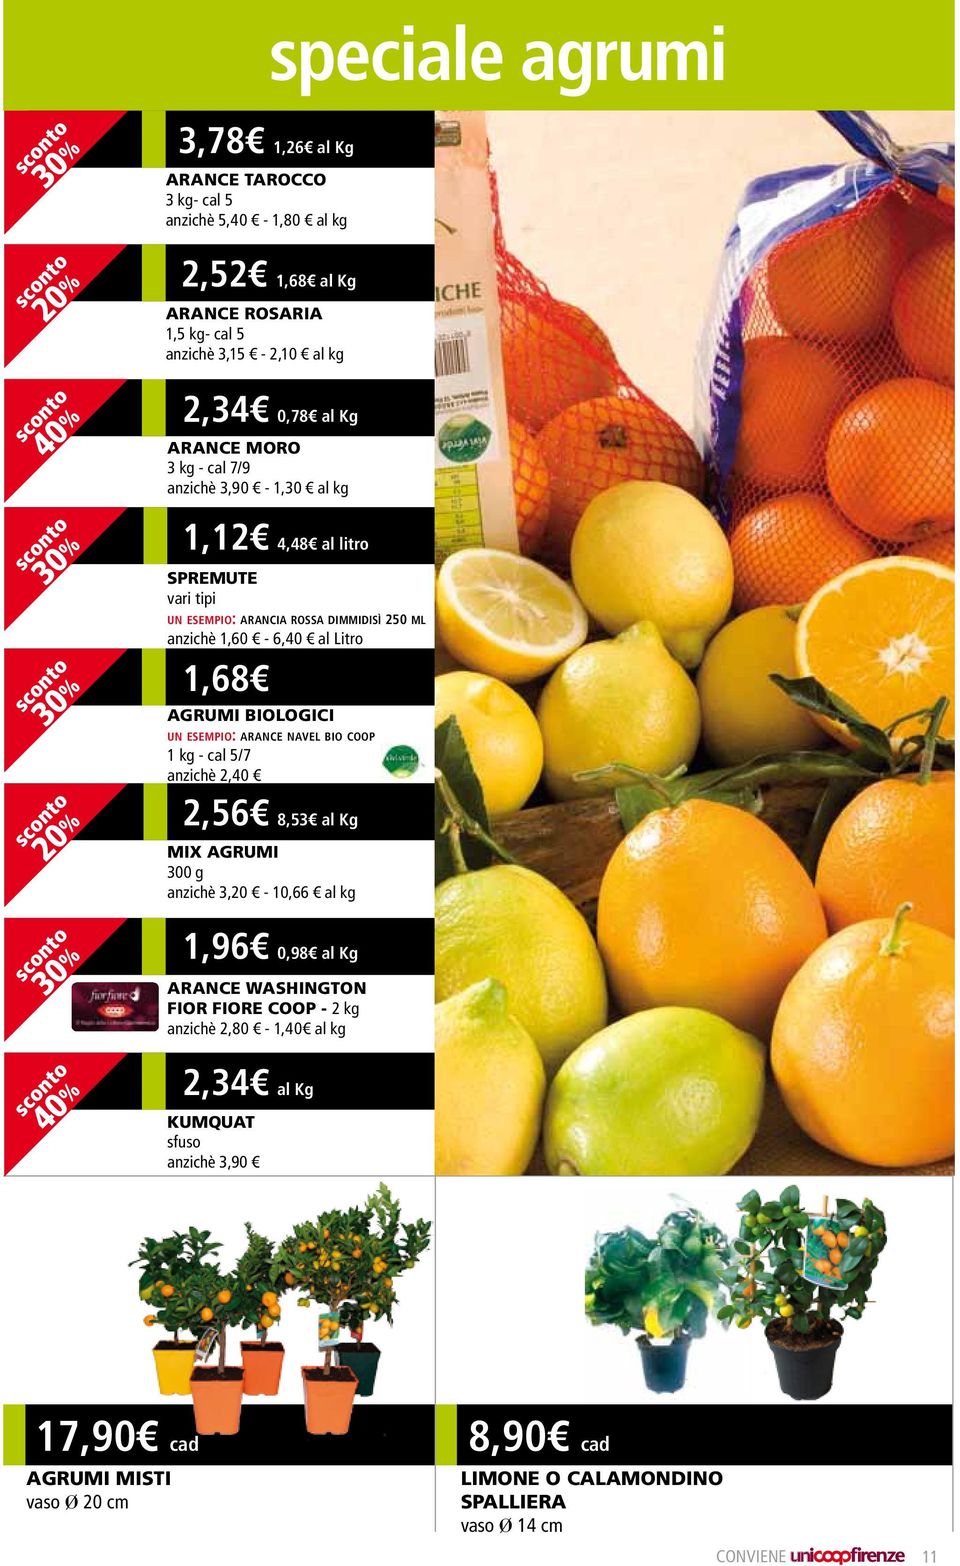 biologici un esempio: arance navel bio coop 1 kg - cal 5/7 anzichè 2,40 2,56 8,53 al Kg mix agrumi 300 g anzichè 3,20-10,66 al kg 1,96 0,98 al Kg arance WASHINGTON FIOR